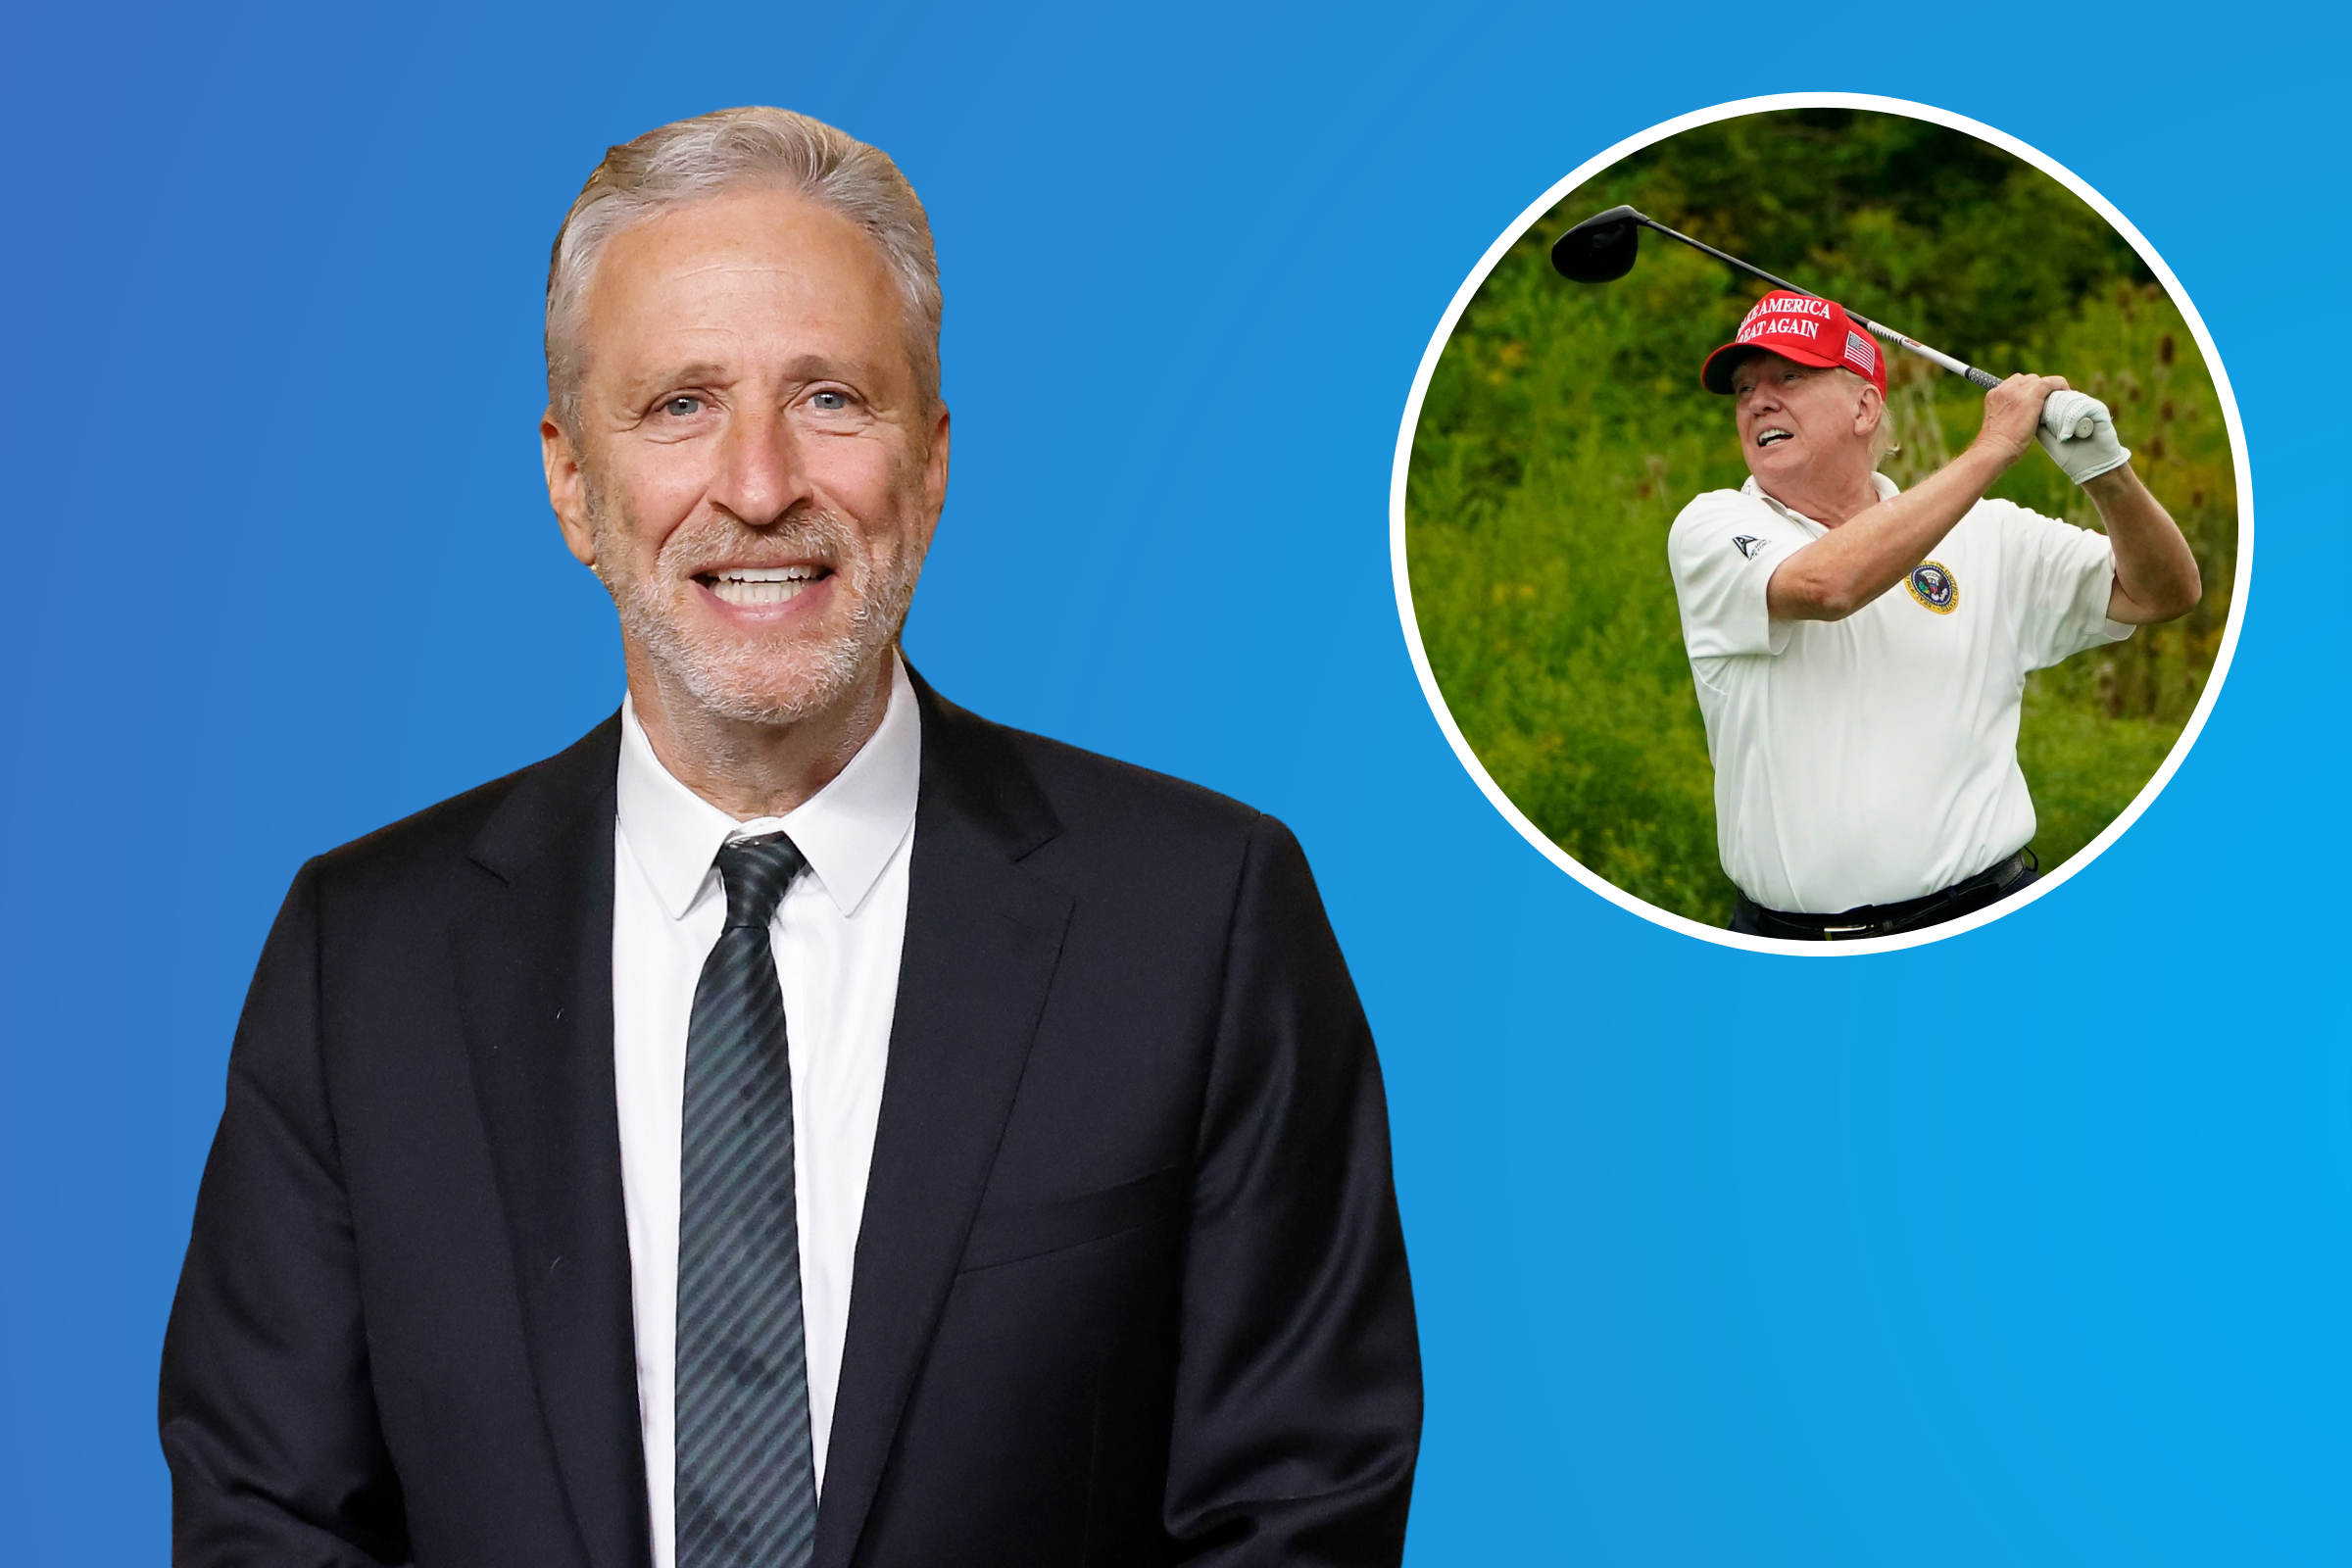 Jon Stewart Mocks Donald Trump Golf Tournament Wins